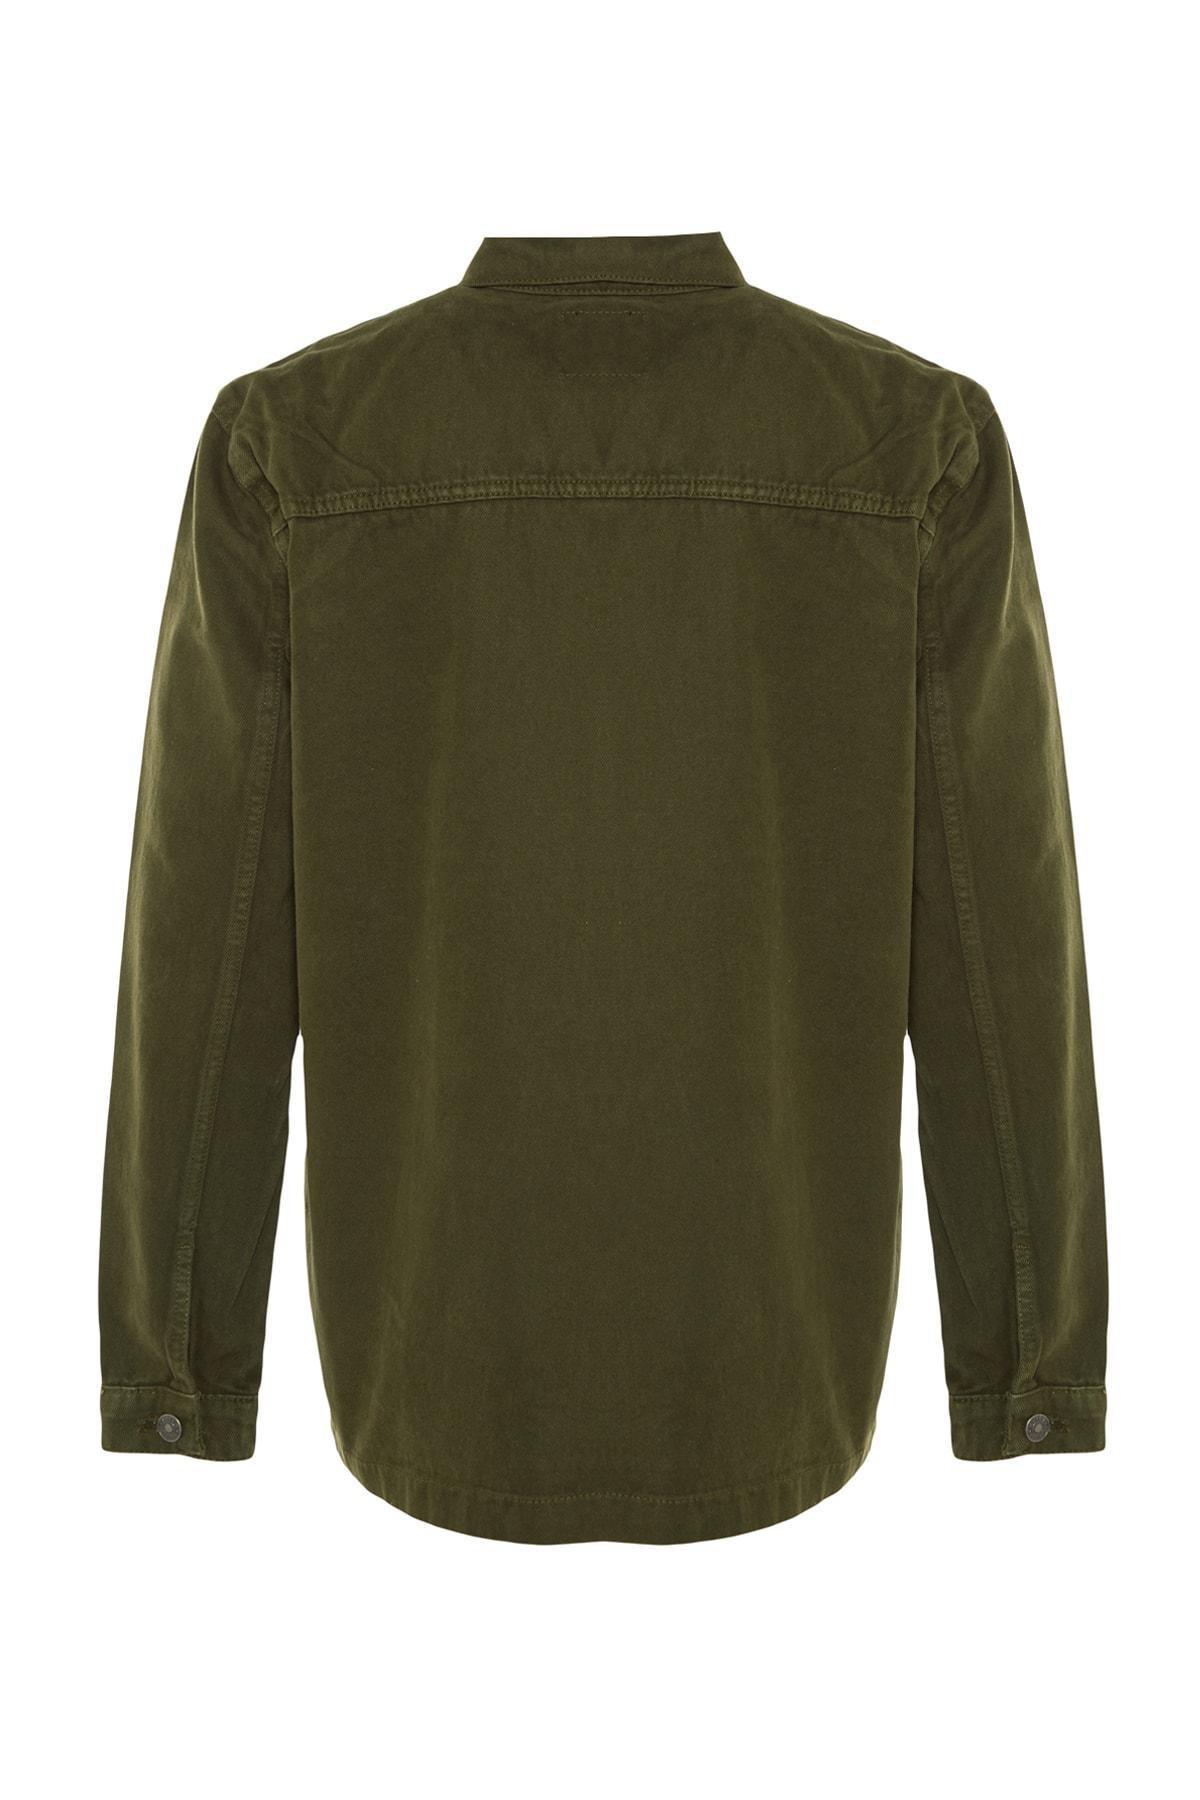 Trendyol - Khaki Cotton Shirt Collar Jacket